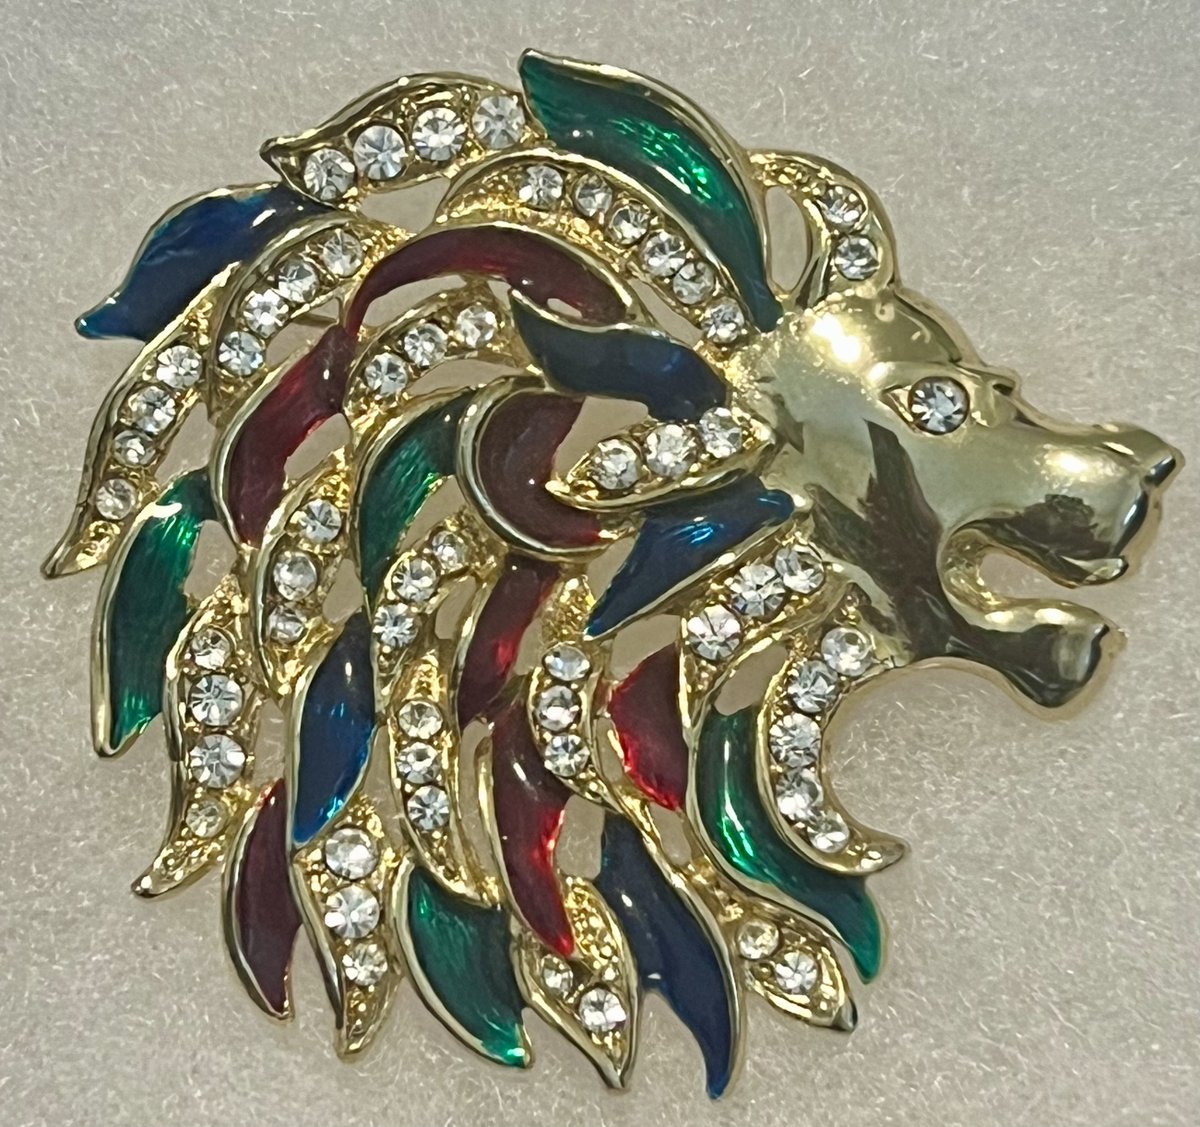 Majestic #Lion #Brooch Rhinestone 2.5' Multicolor #EnamelPin VINTAGE 90s FREE SHIP
#rhinestonejewelry #rhinestone #majestic #animaljewelry #rhinestonebrooch #enamelbrooch #enameljewelry #vintage90s #statementjewelry #ebayfinds #vintagebrooch #broochstyle

 ebay.com/itm/2668201654…